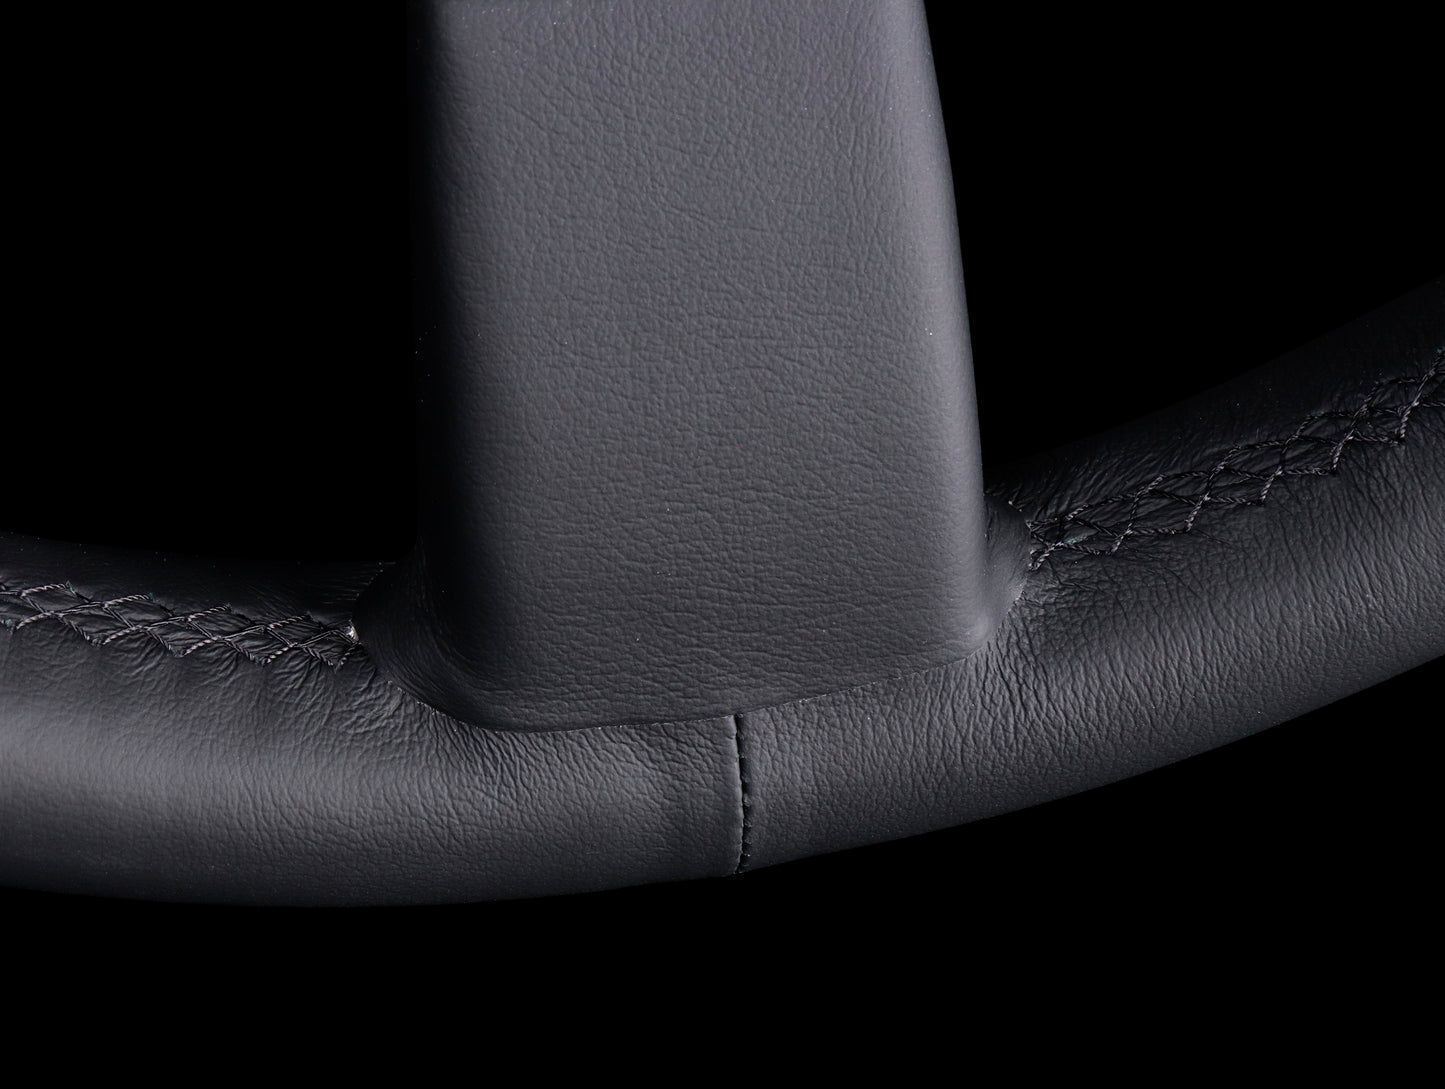 Personal Grinta 350mm Steering Wheel - Black Edition / Leather